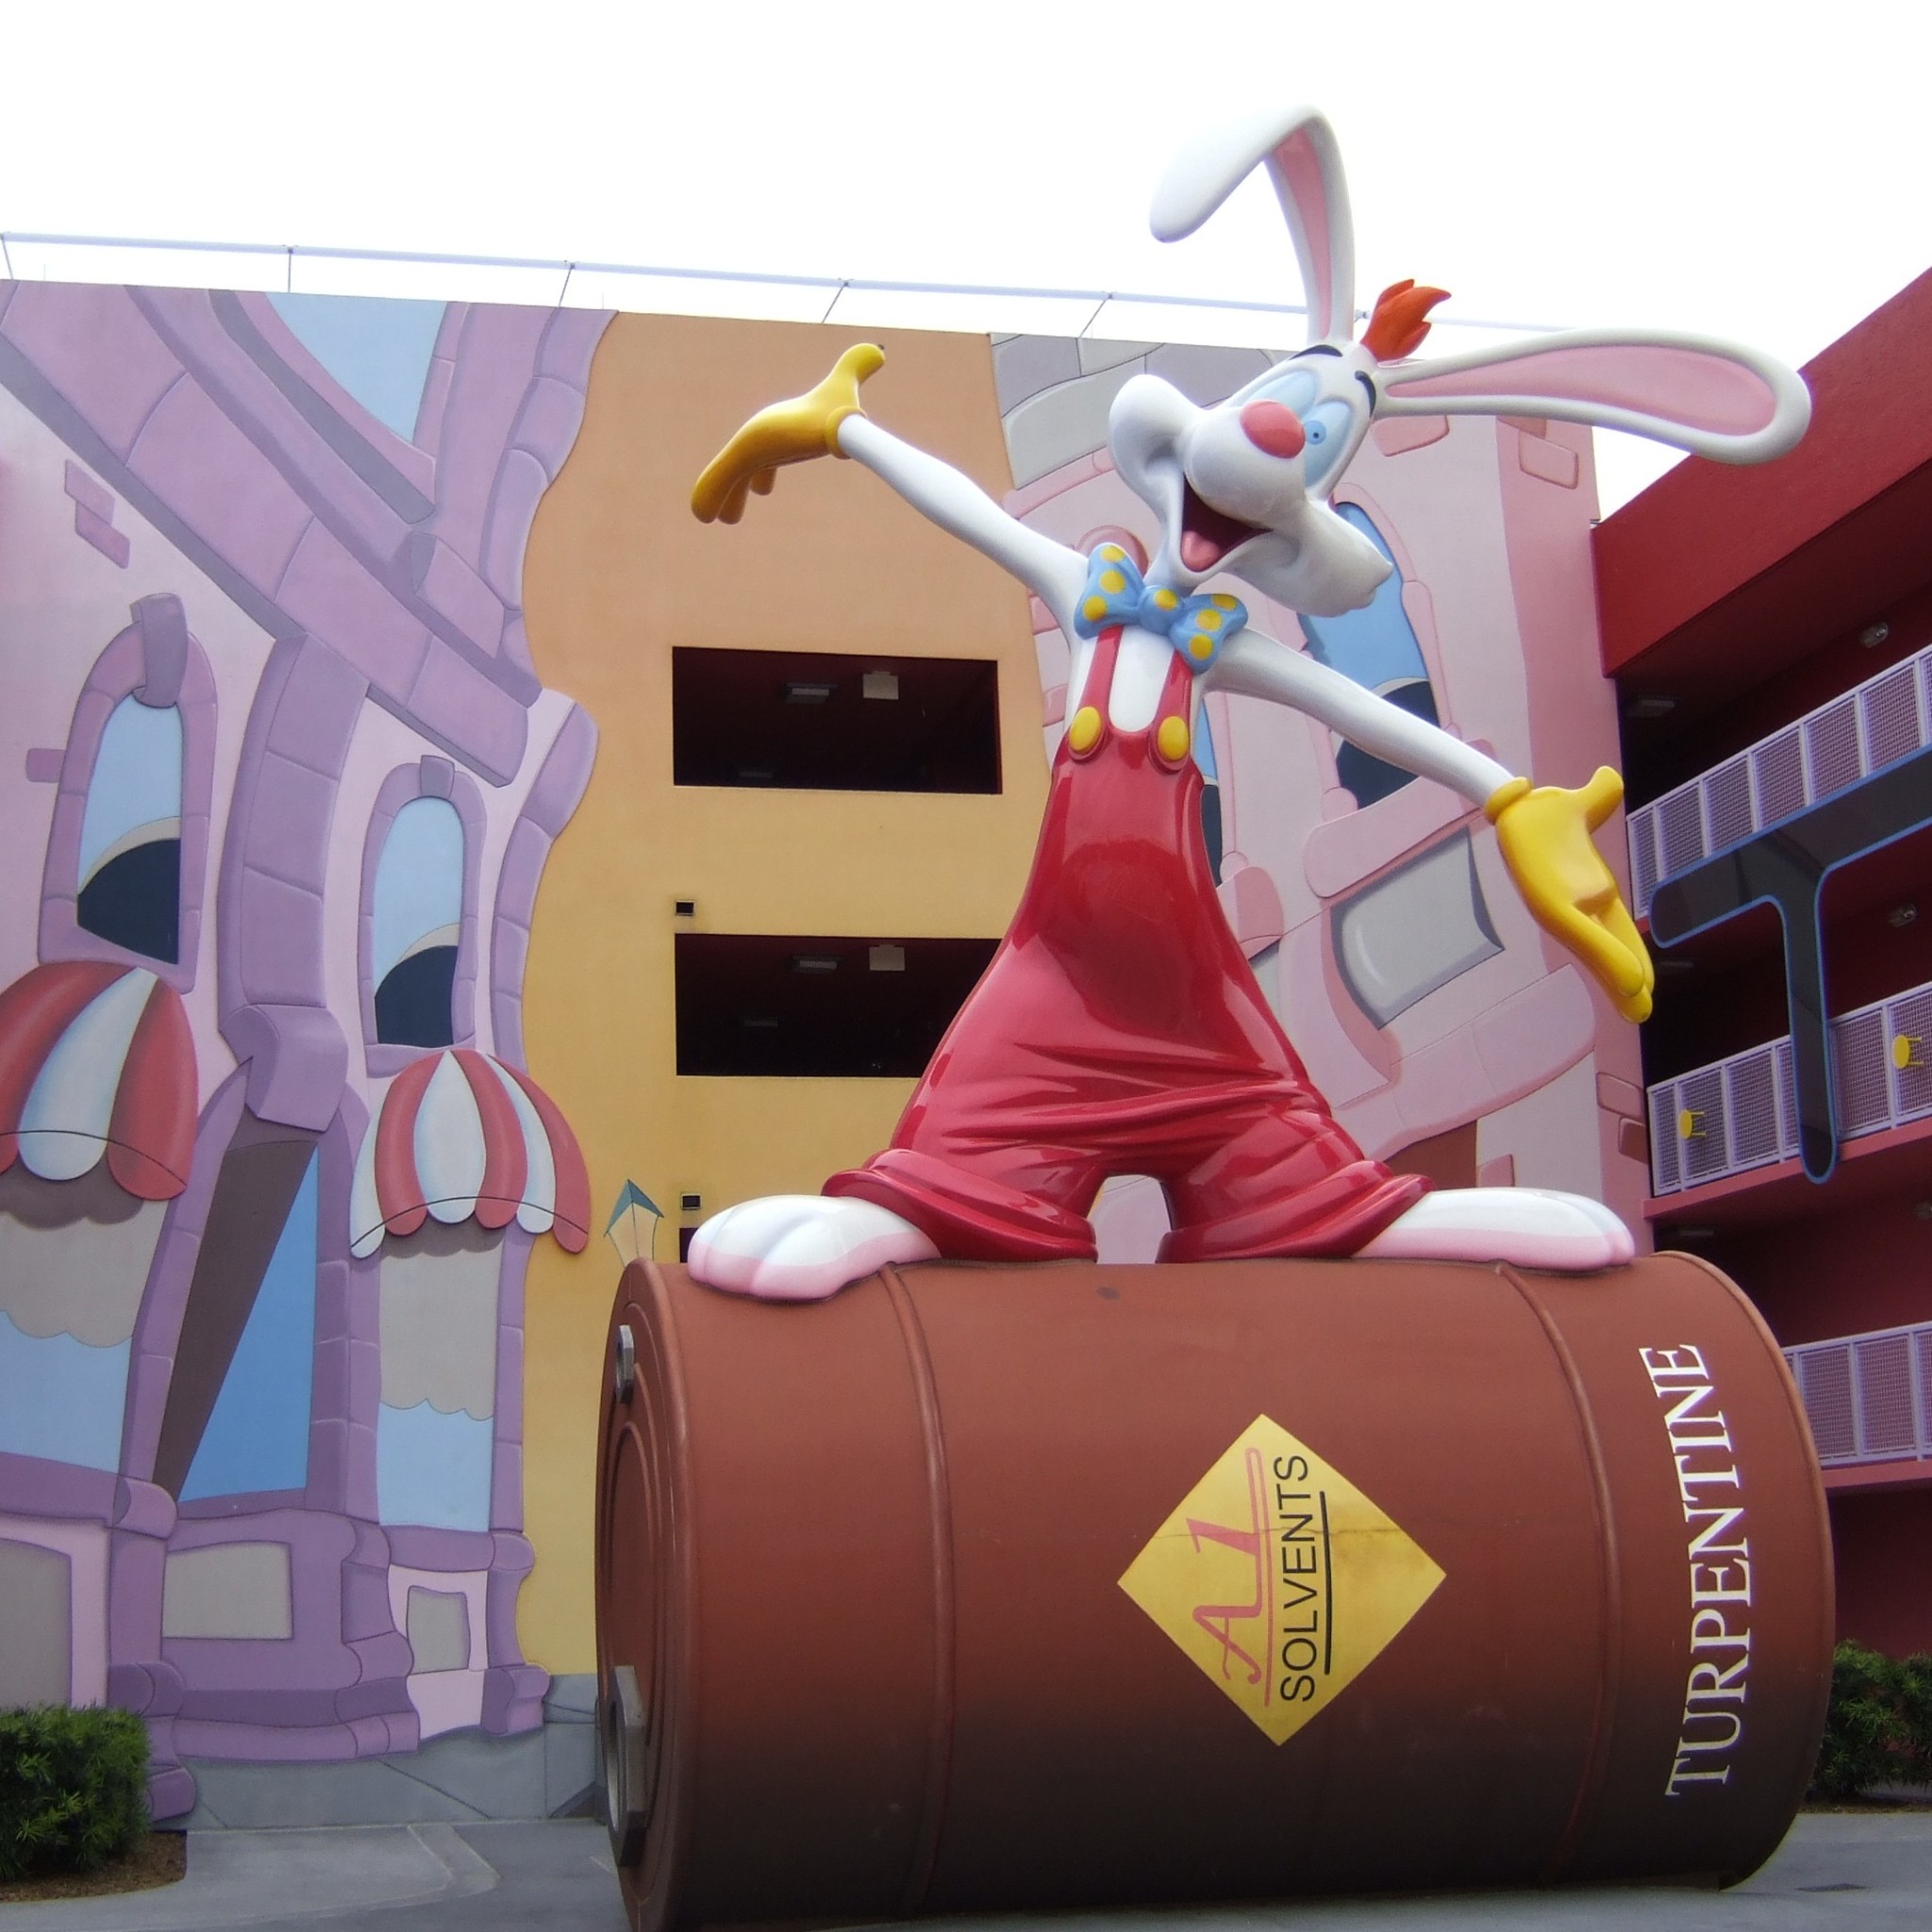 Disney needs to Bring Back Roger Rabbit